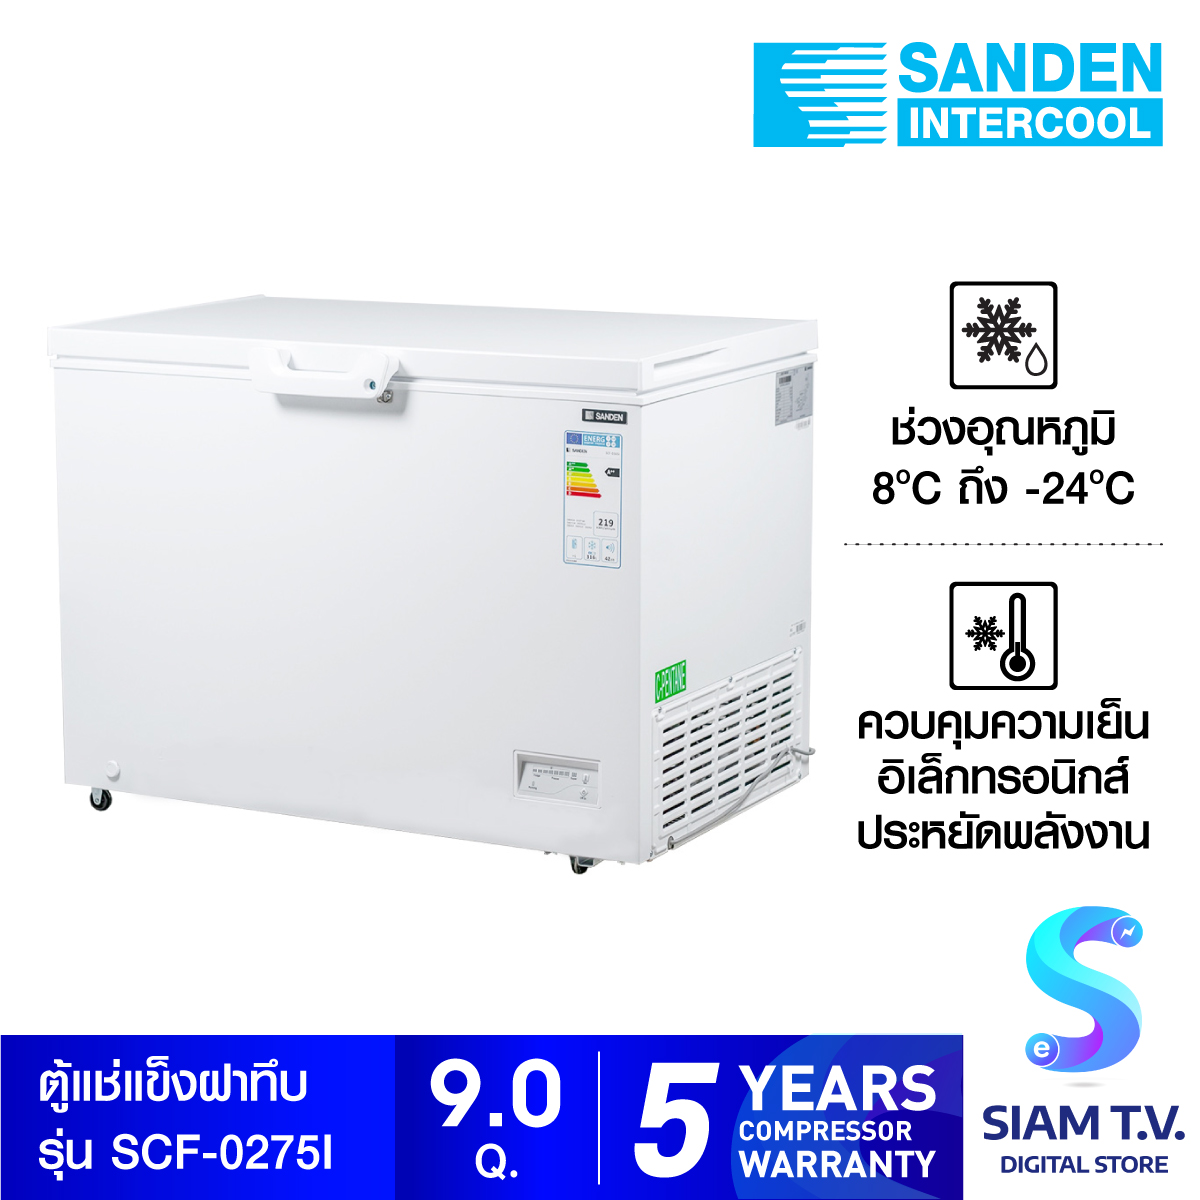 SANDEN ตู้แช่แข็งฝาทึบ 1 ประตู รุ่น SCF-0275I Inverter ความจุ 260 ลิตร 9 คิว โดย สยามทีวี by Siam T.V.